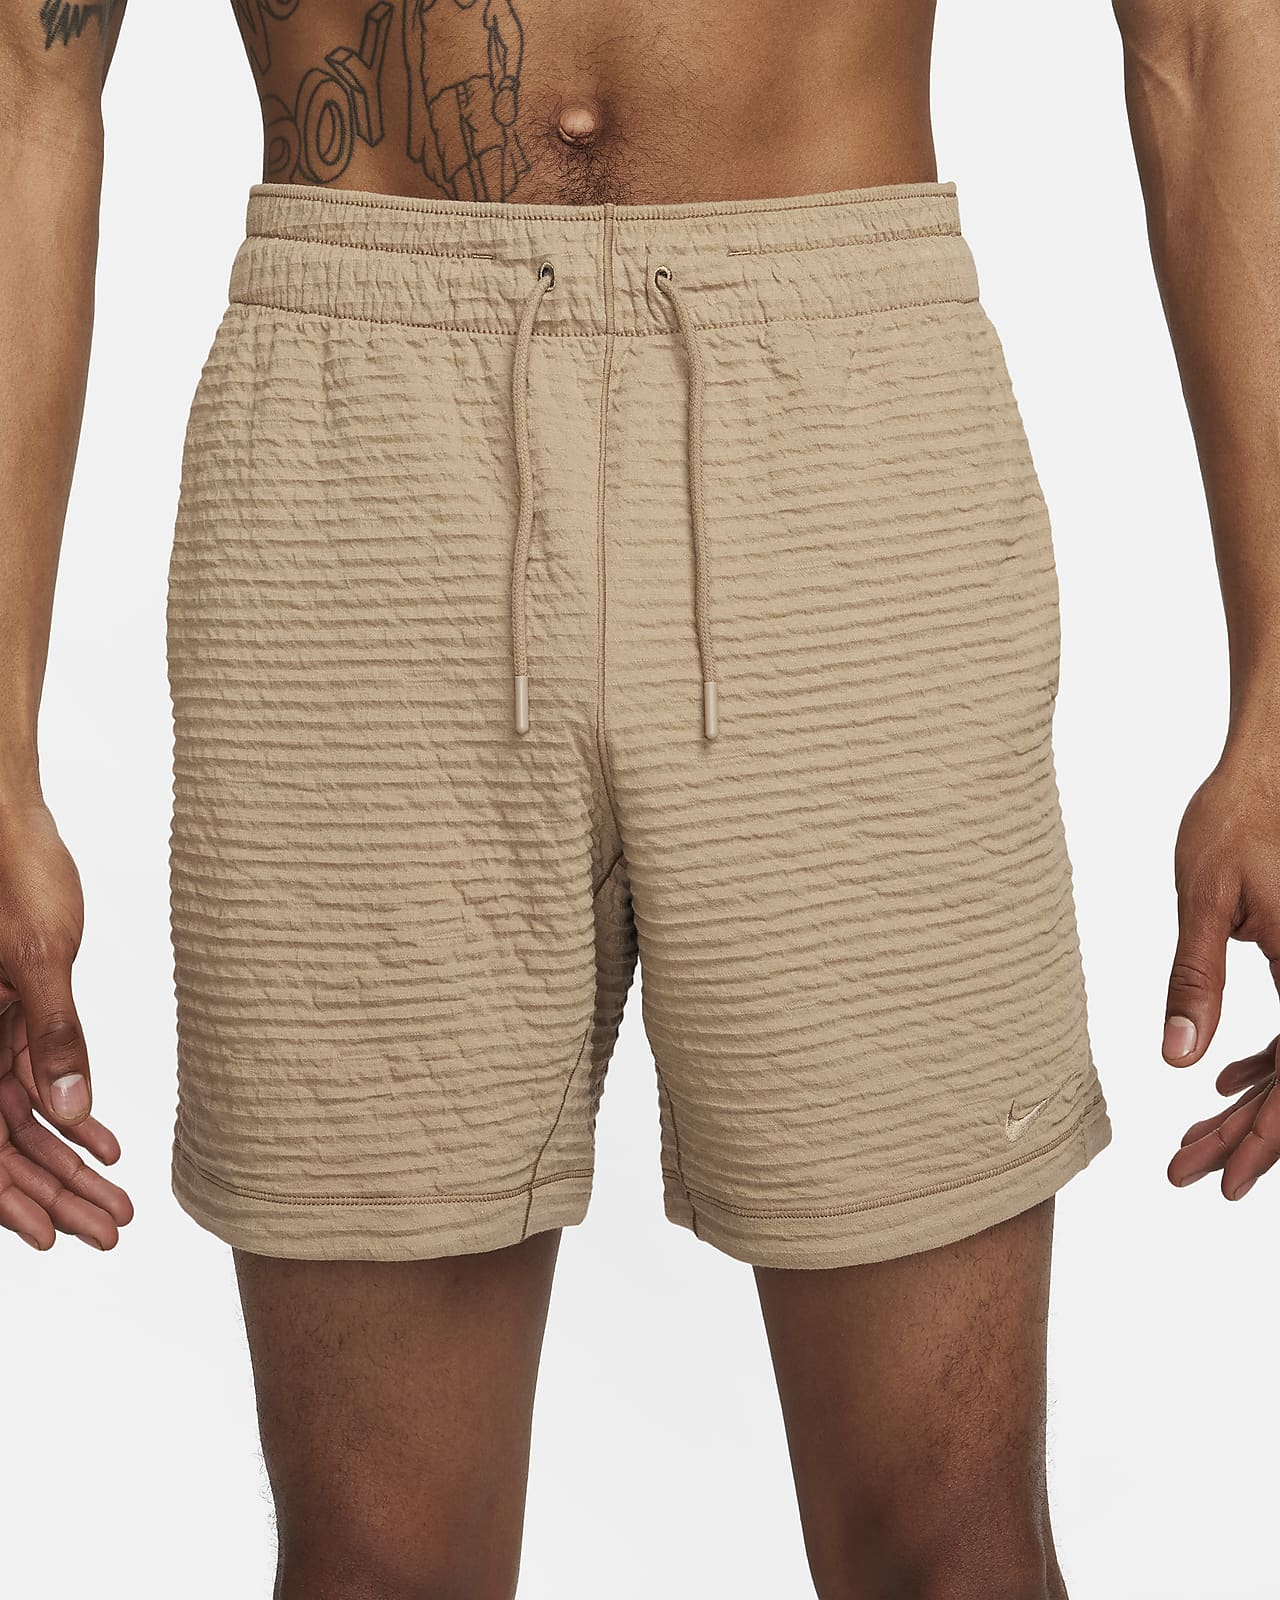 Cotton On Body Strappy Sports Bra, Men's Fashion, Bottoms, Shorts